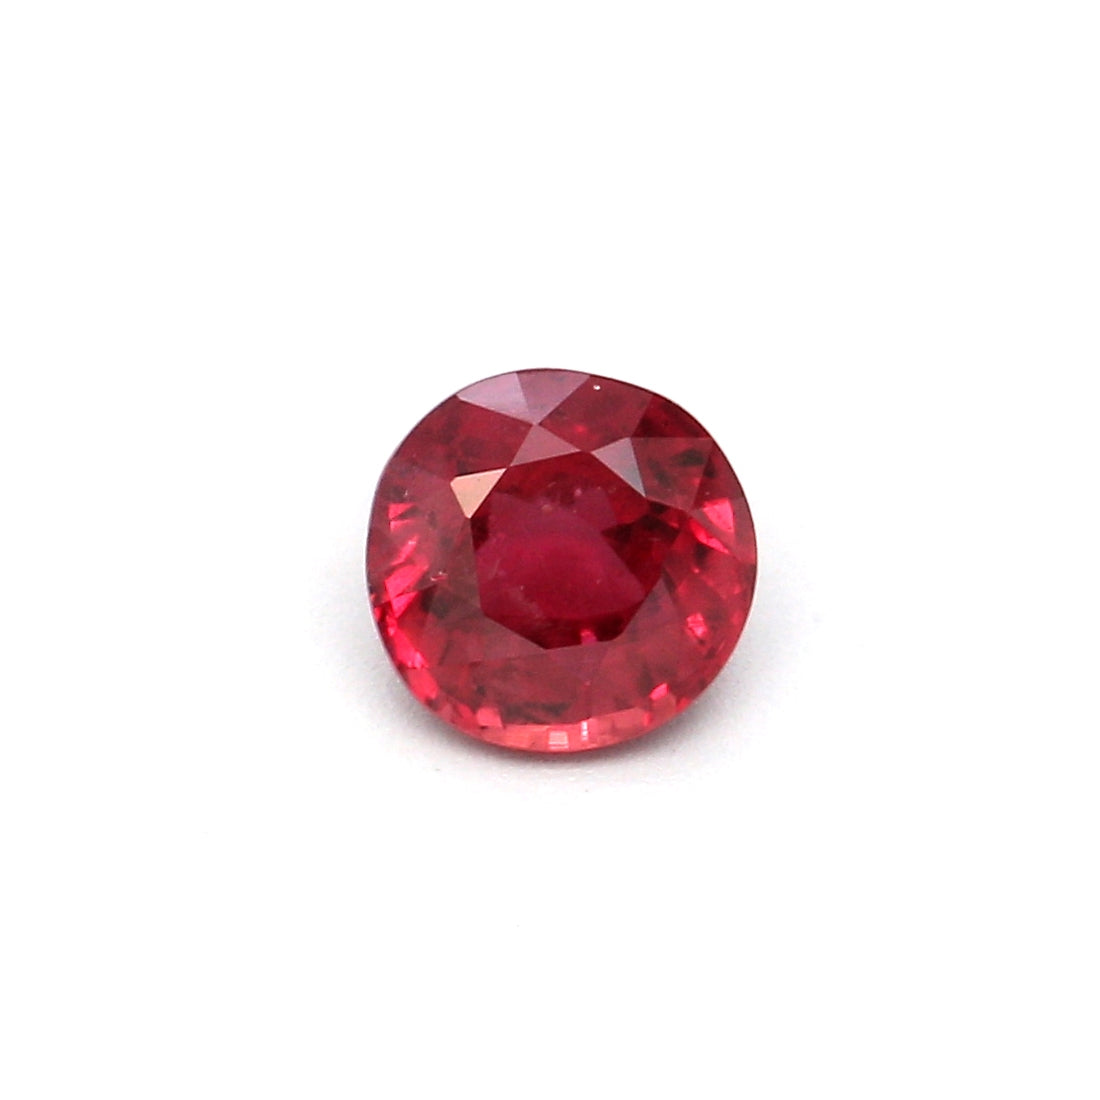 0.41ct Orangy Red, Round Ruby, Heated, Thailand - 4.20 x 4.34 x 2.66mm